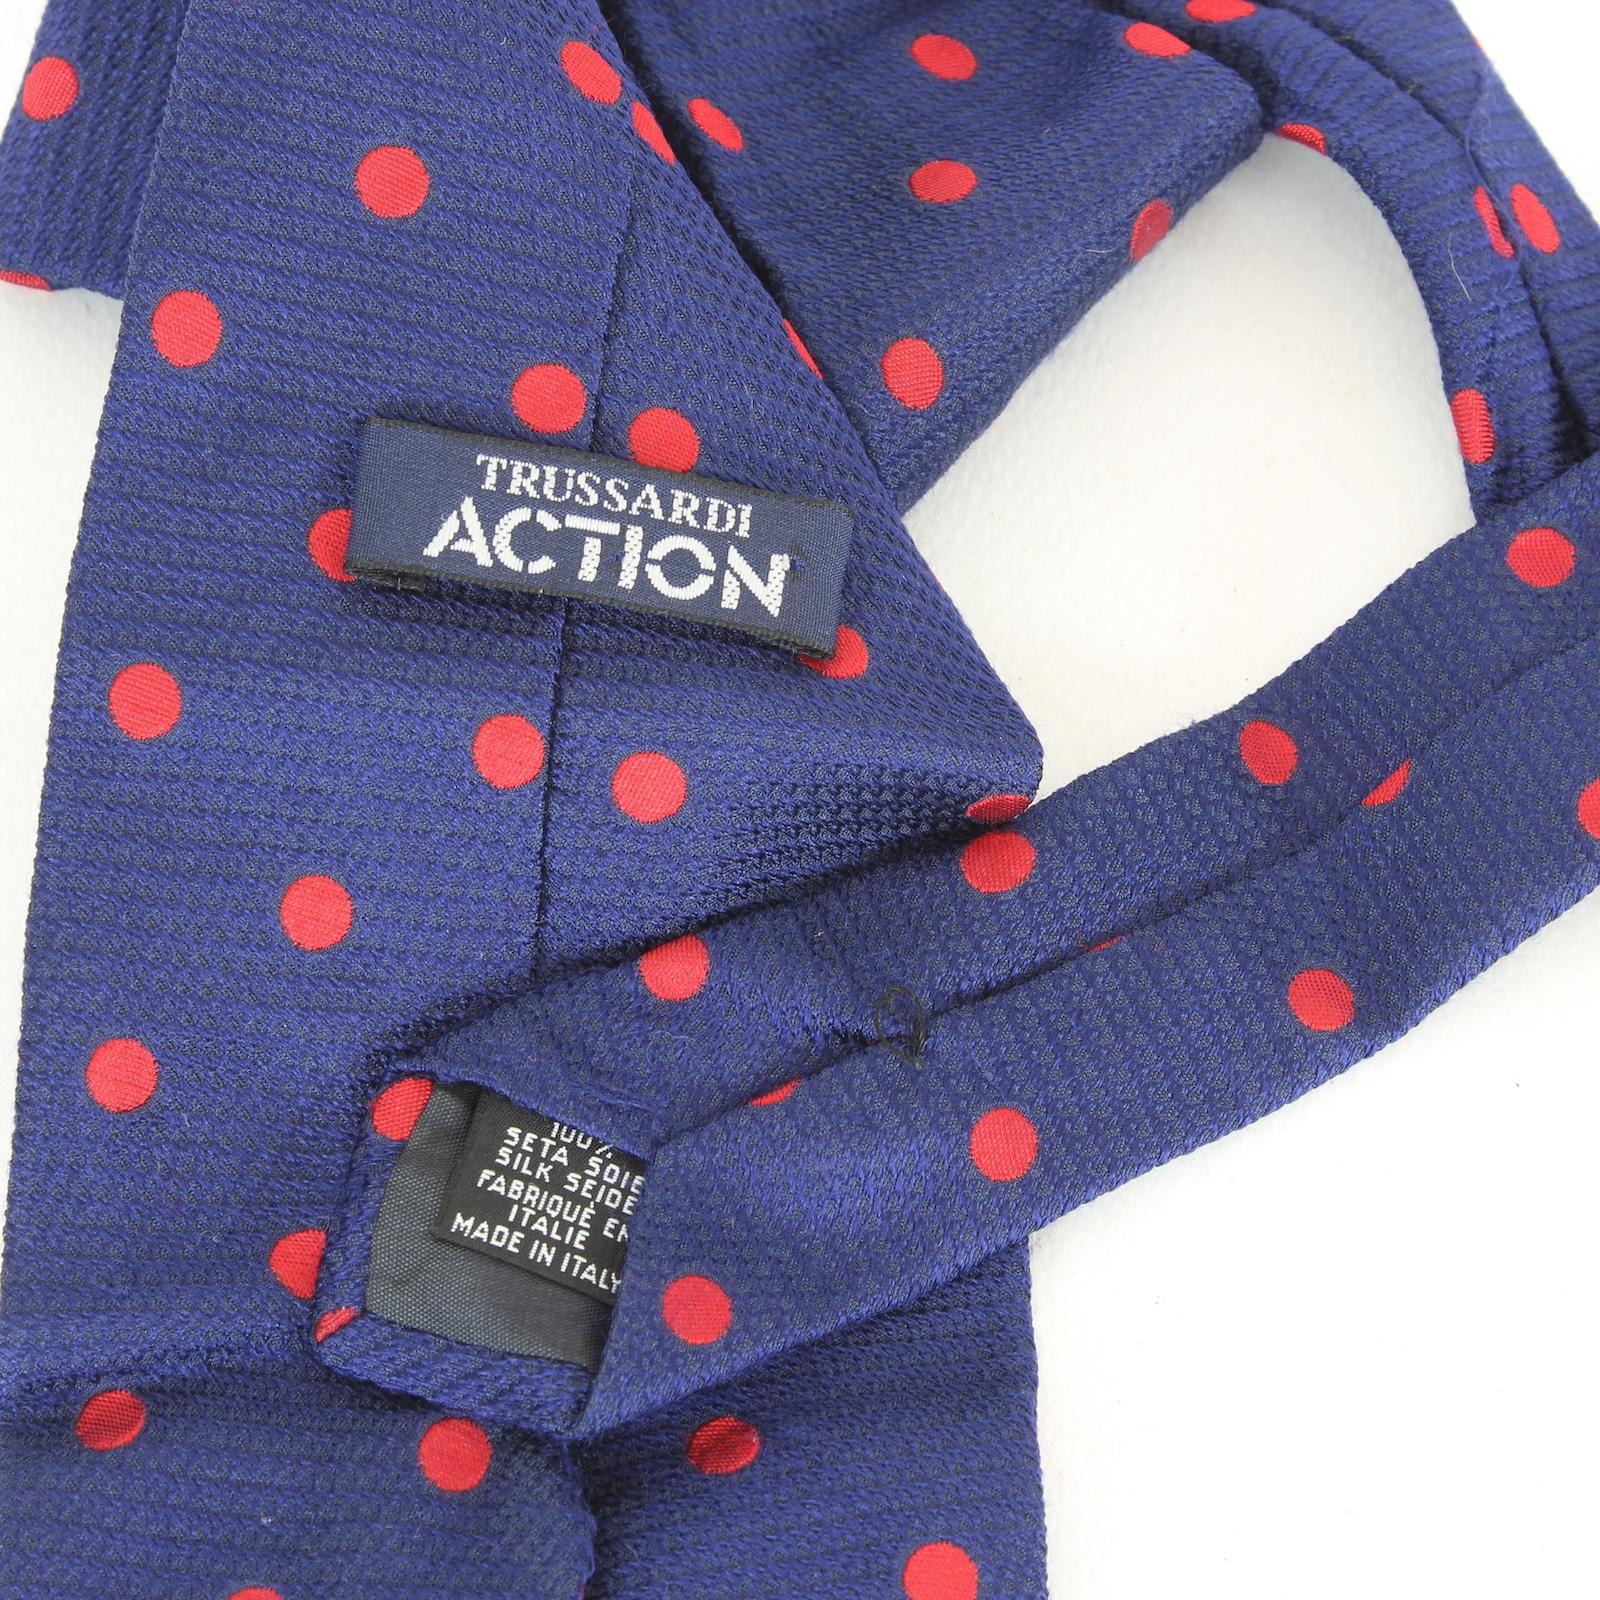 Pierre Cardin Blau Rot Seide Paisley Klassische Krawatte 1980s Herren im Angebot